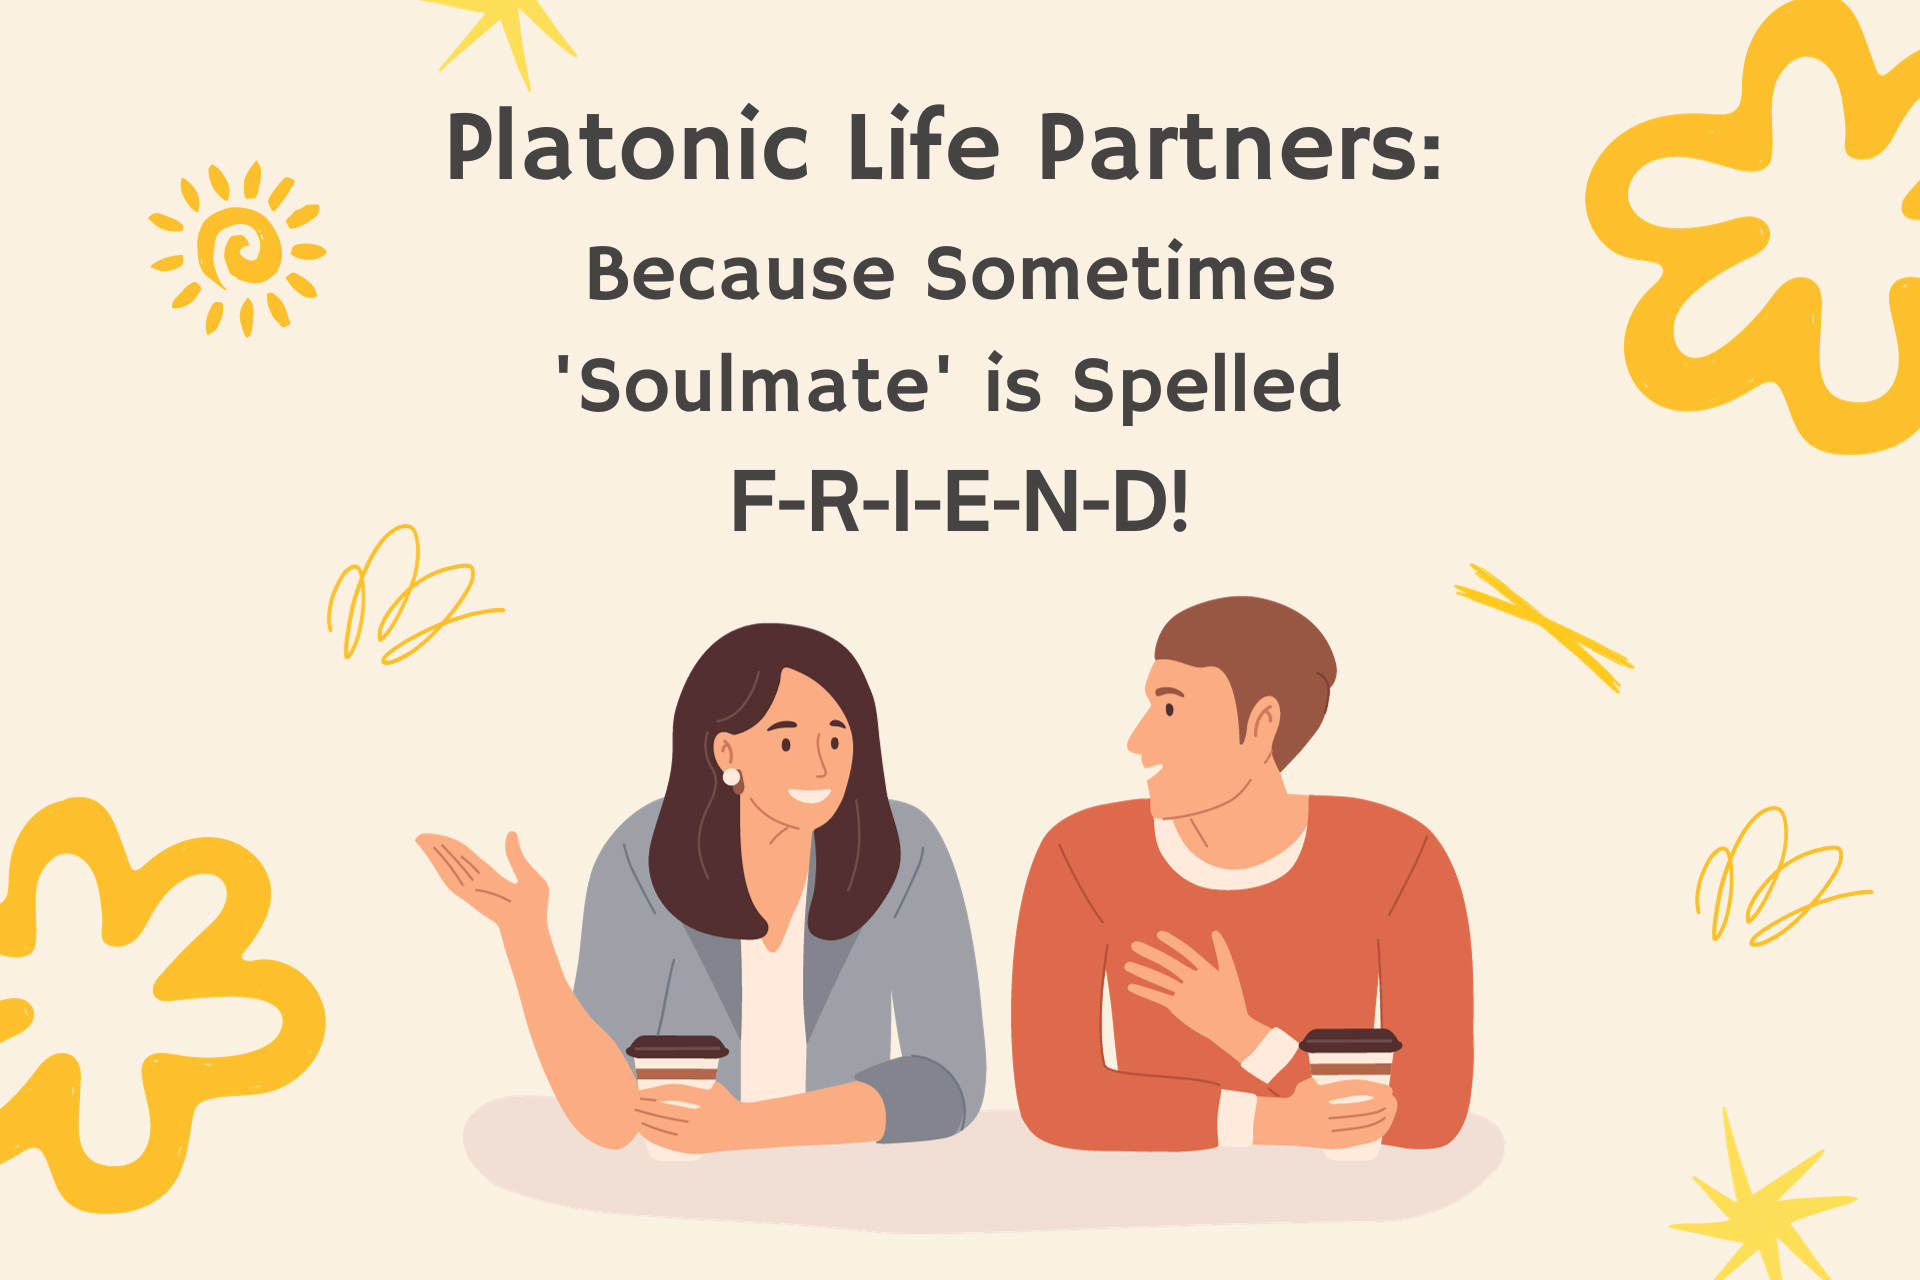 Platonic life partnership